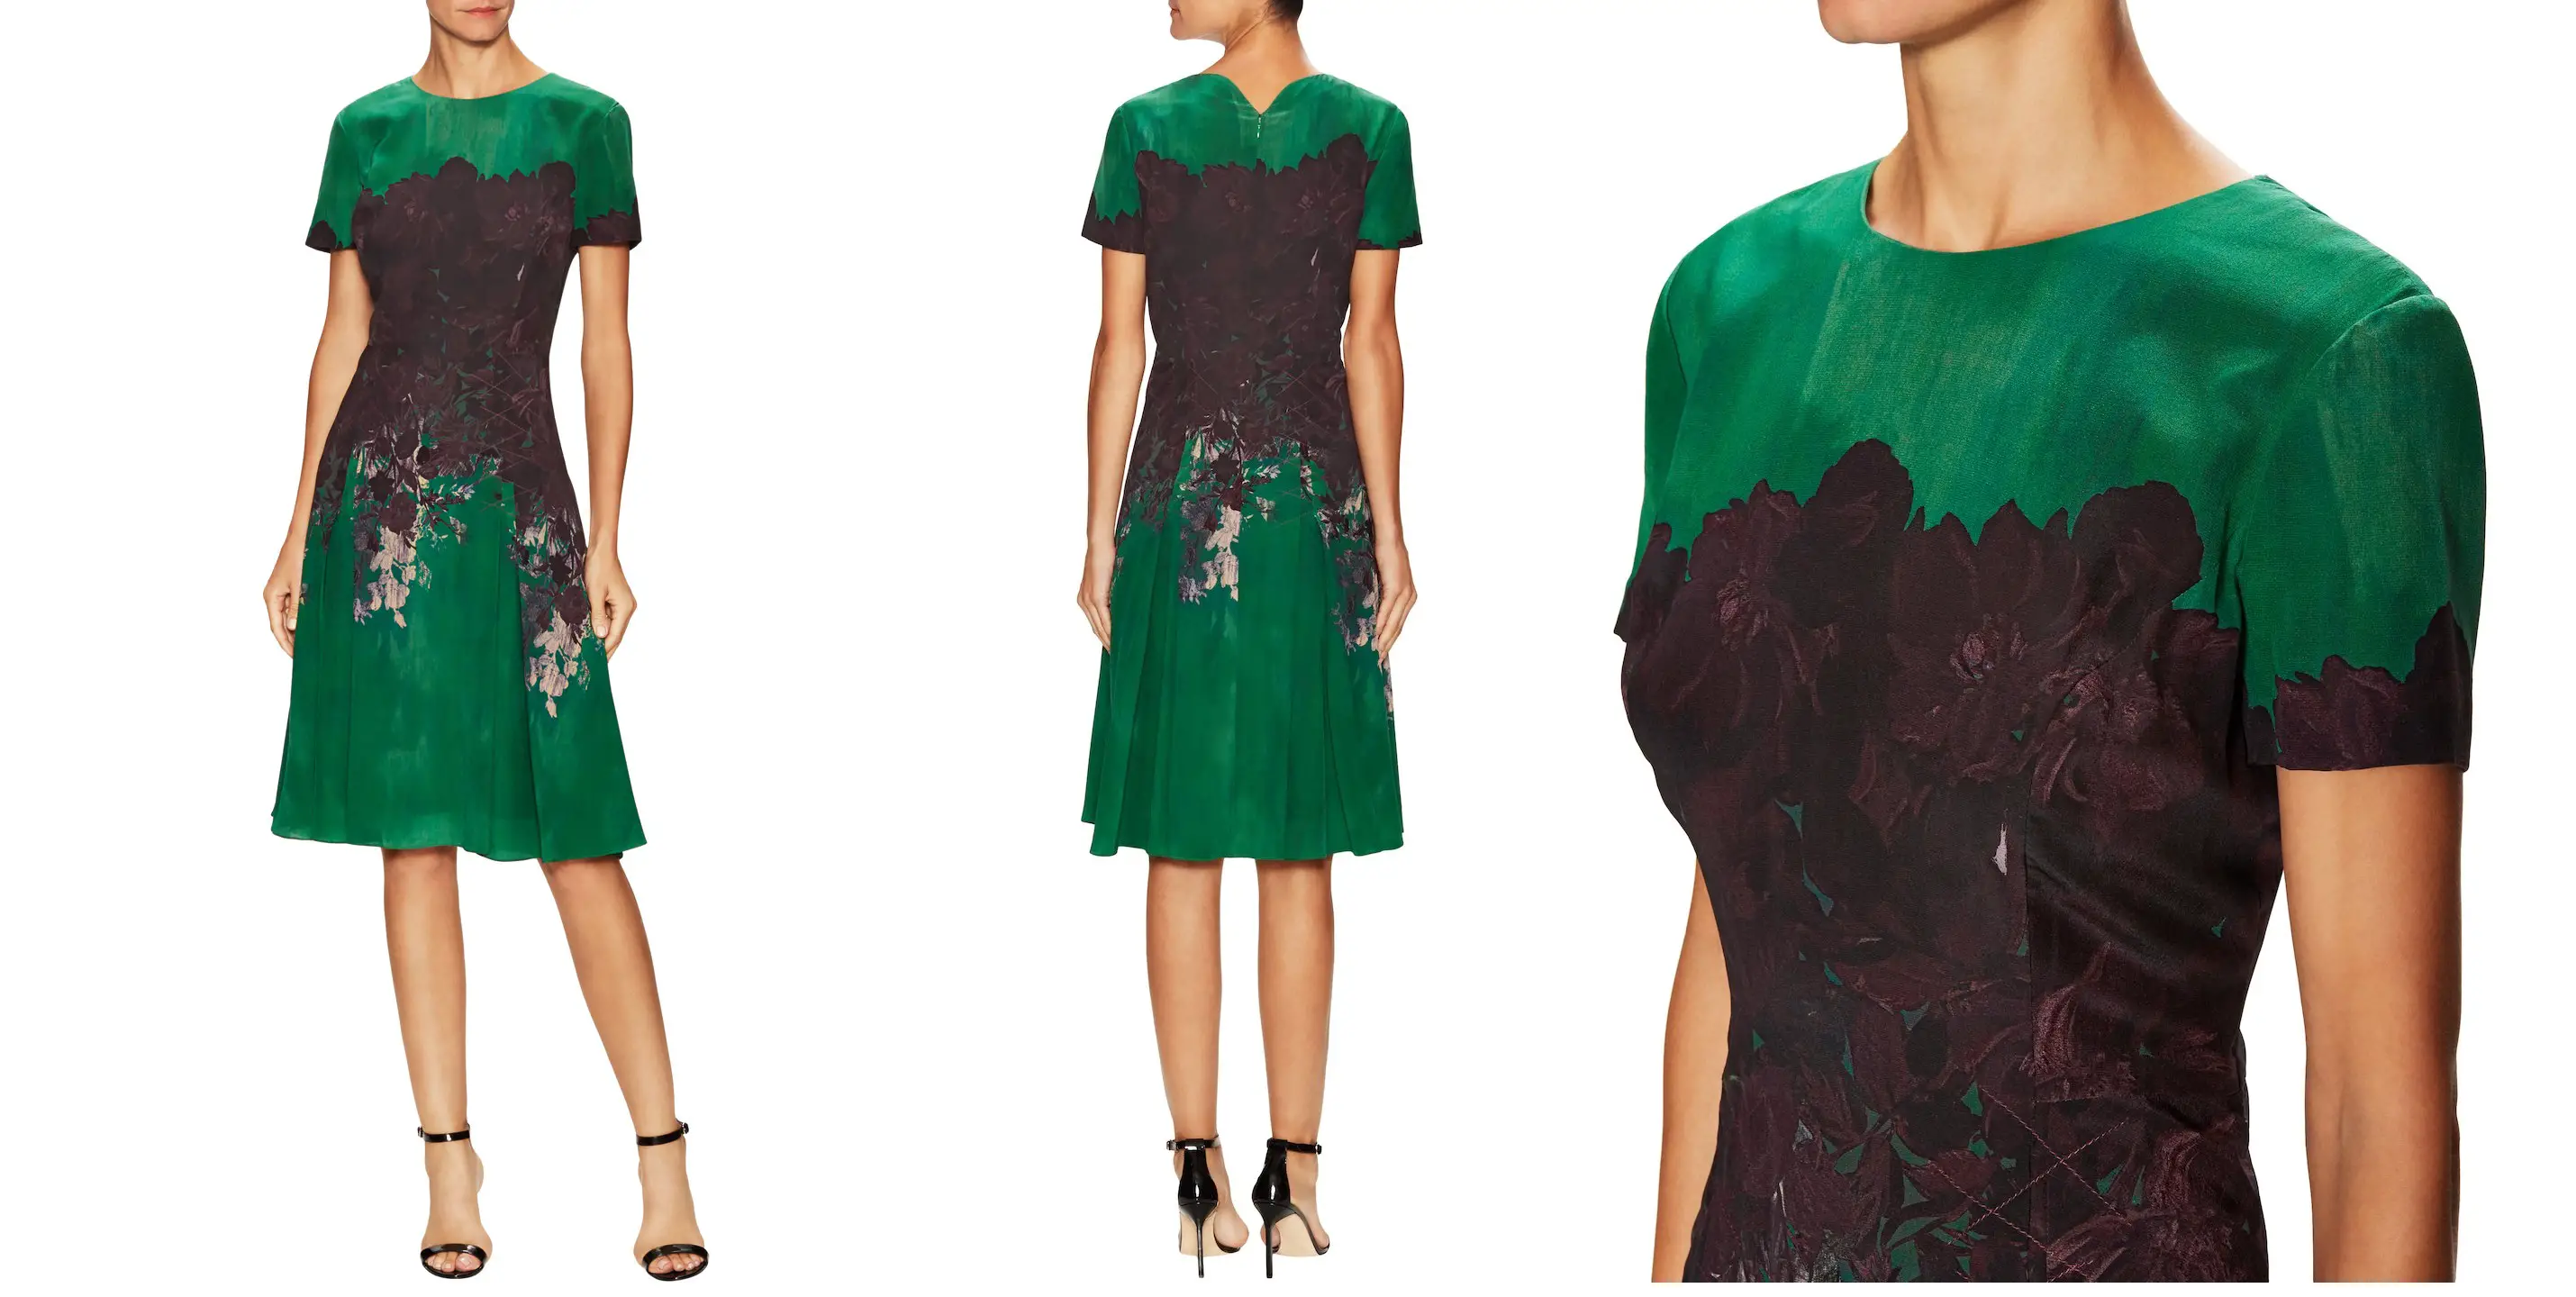 Carolina Herrera Pre-Fall 2015 Green Dress